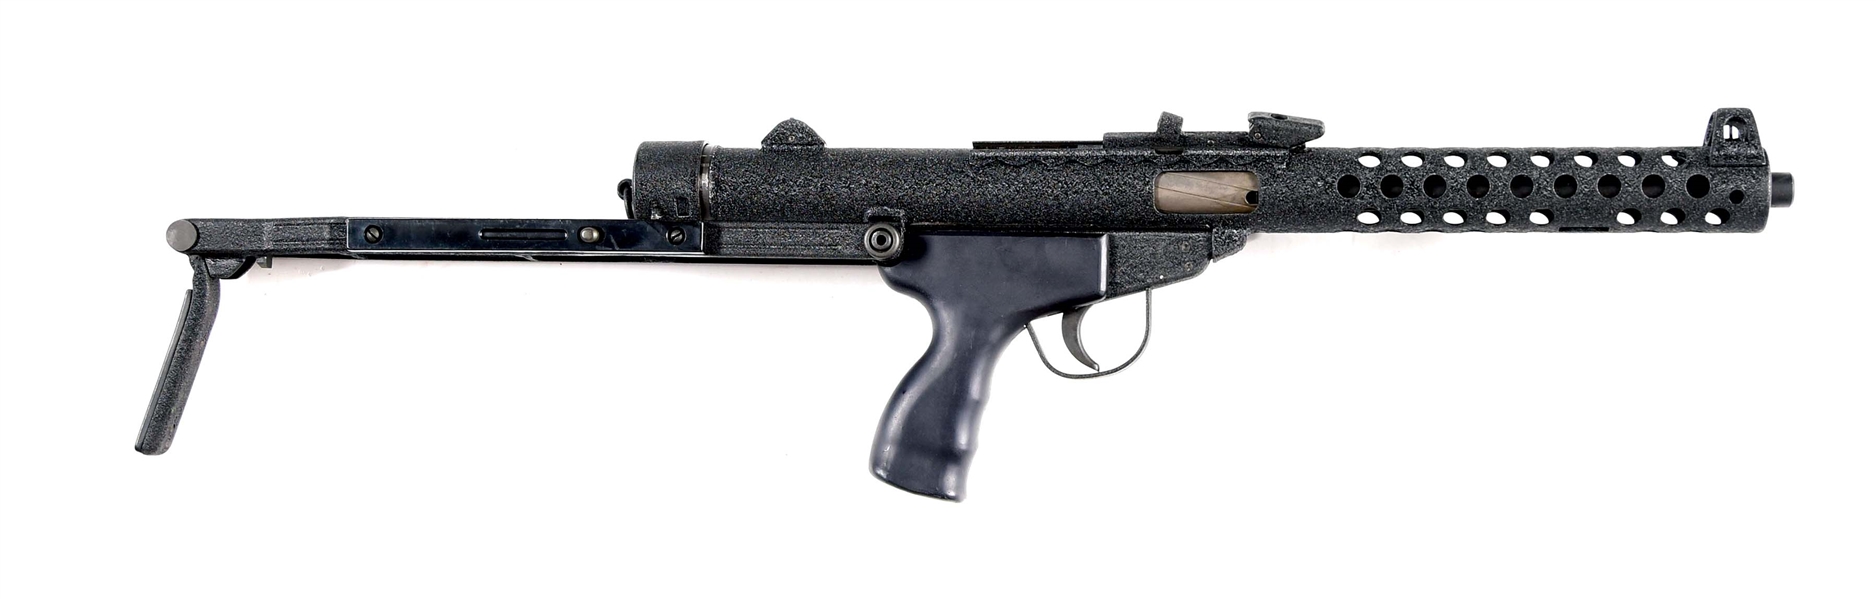 (N) EXCEPTIONALLY SCARCE HIGH CONDITION ORIGINAL SPANISH CETME C2 MACHINE GUN (STERLING LOOK ALIKE) (PRE-86 DEALER SAMPLE).